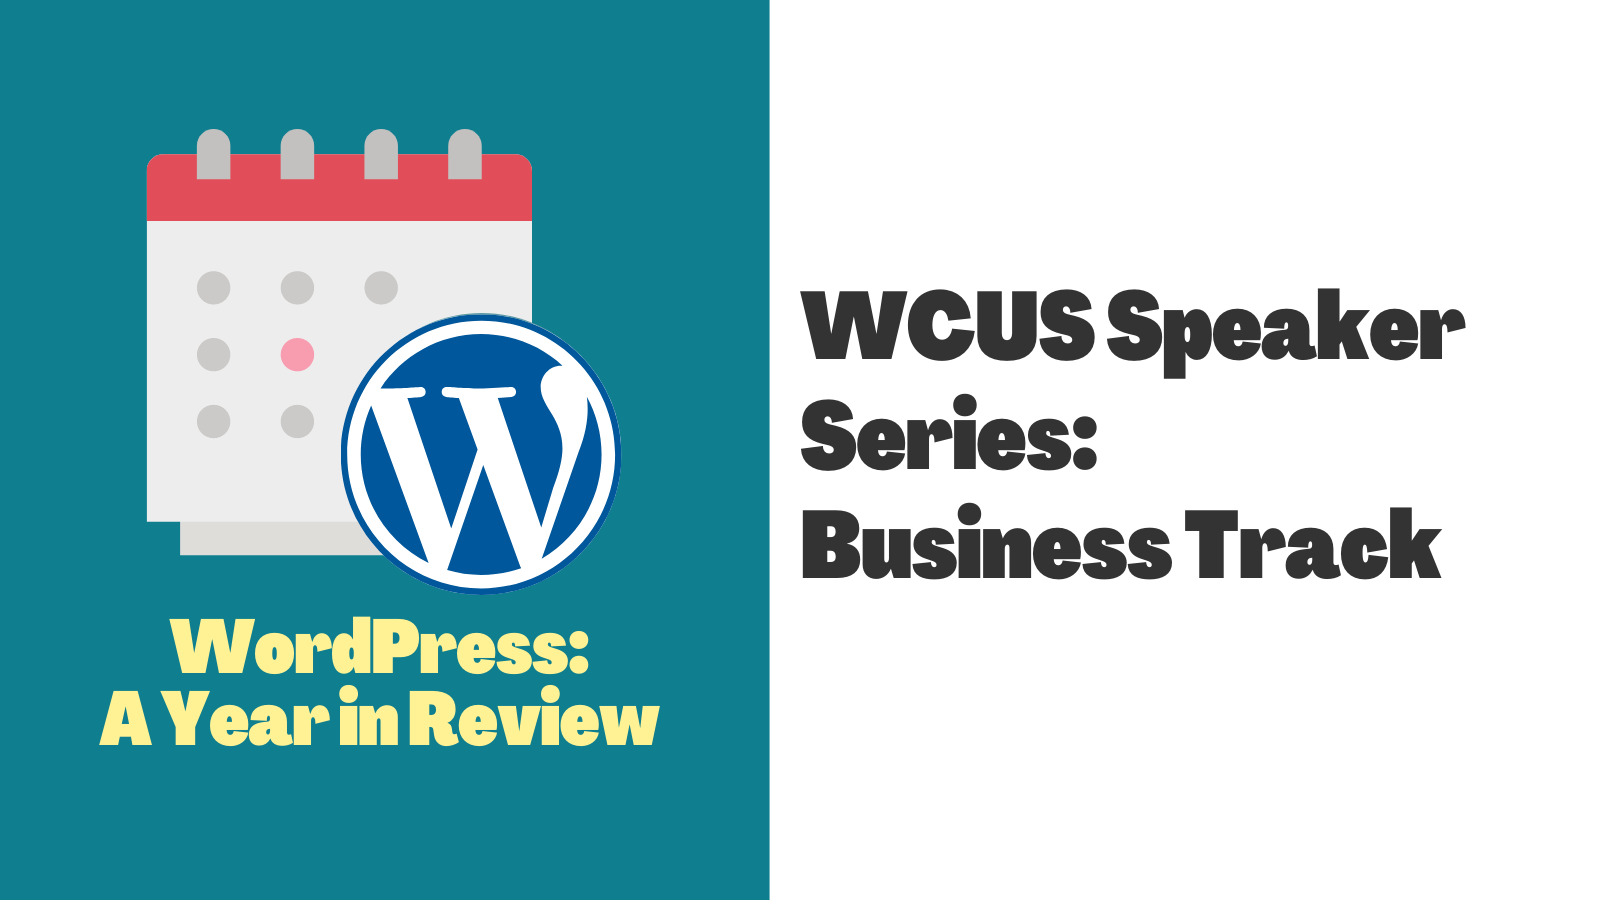 WCUS Speaker Series: Business Track